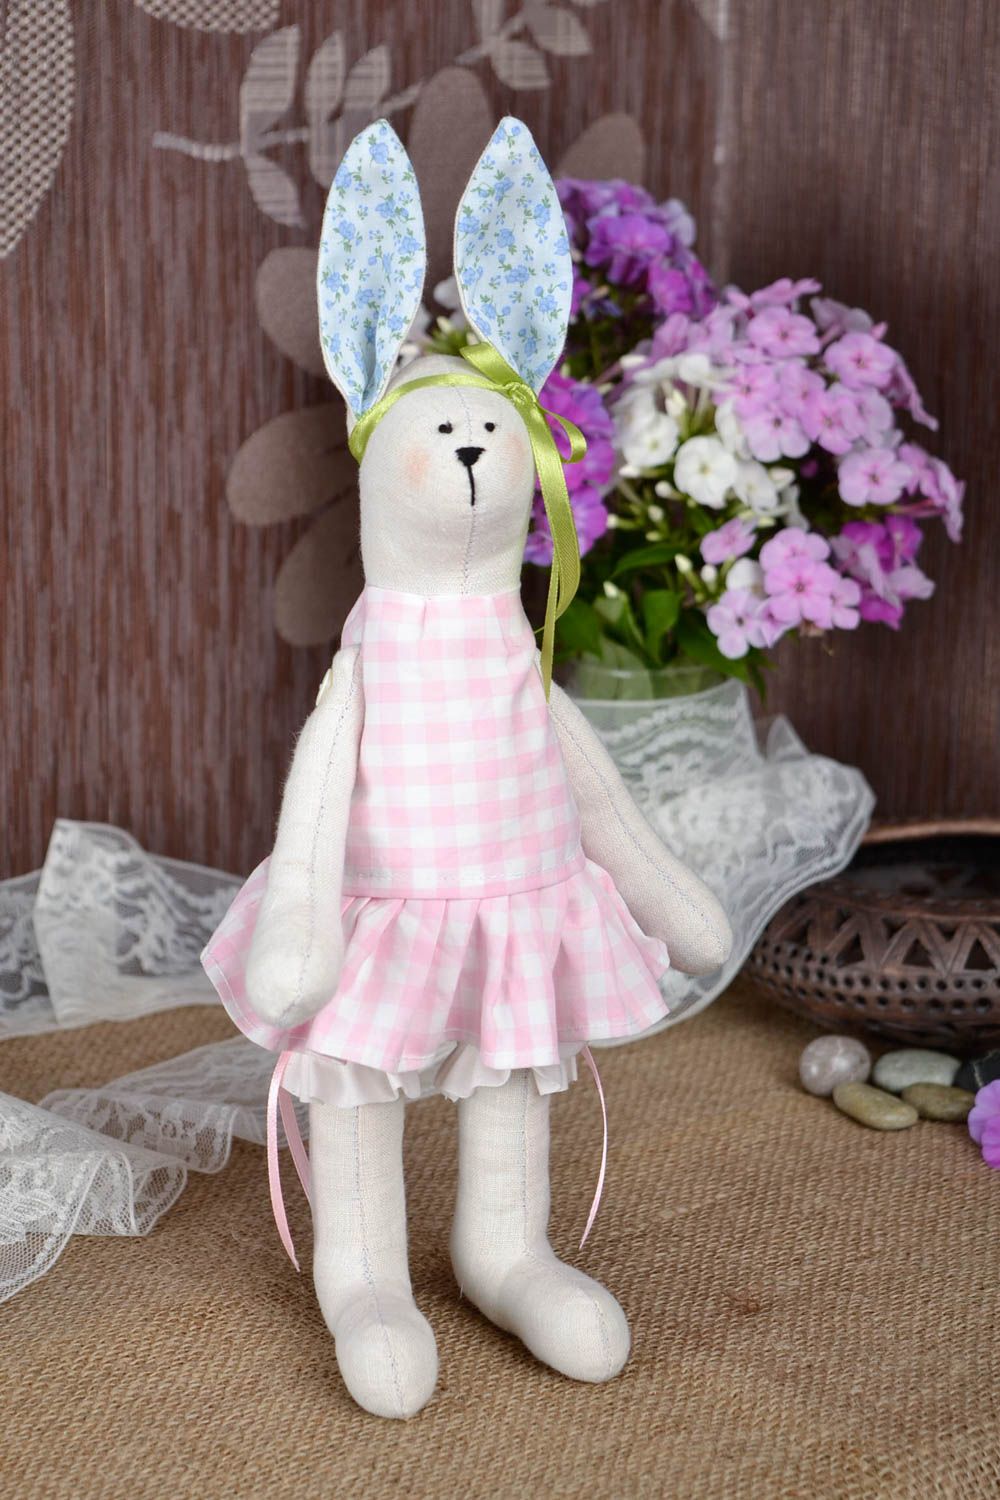 Stuffed toy rabbit toy homemade toys animal toys bedroom decor souvenir ideas photo 1